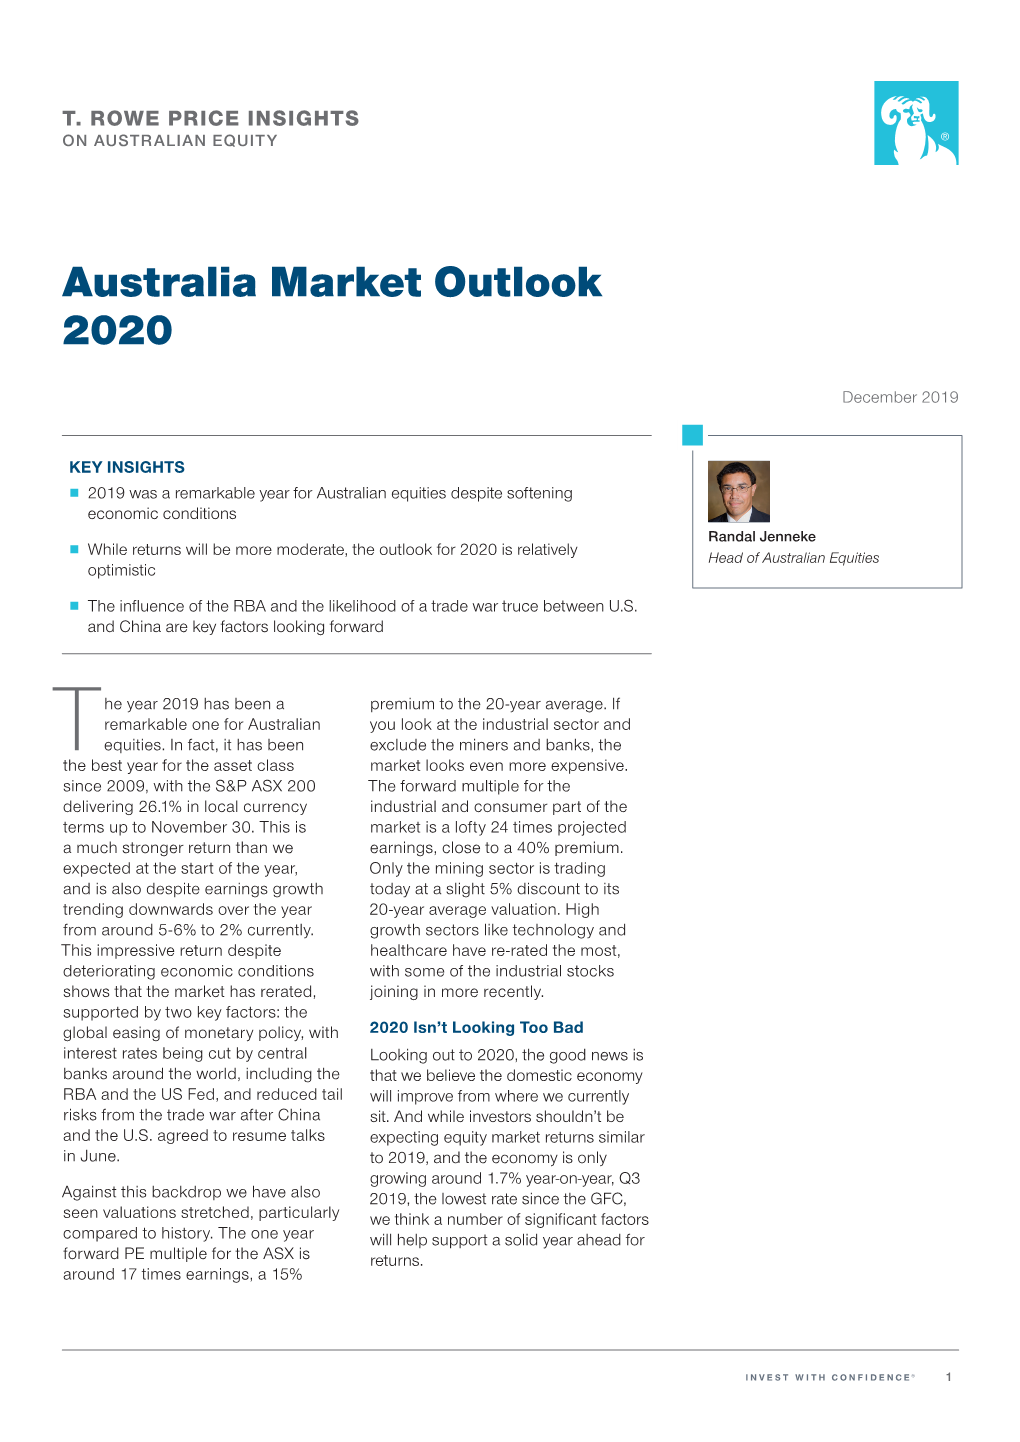 Australia Market Outlook 2020